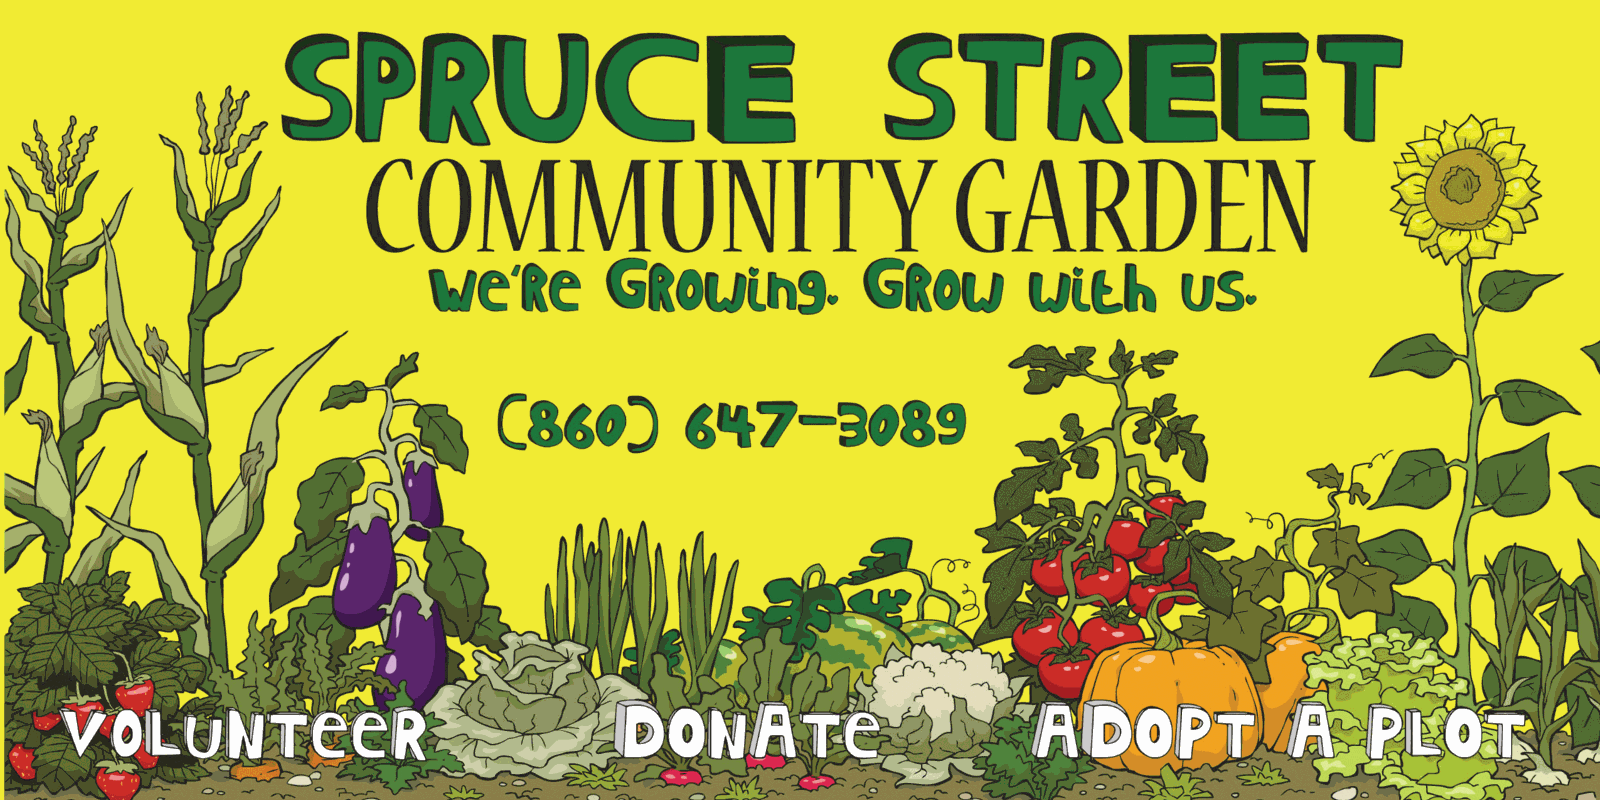 Spruce street community garden poster